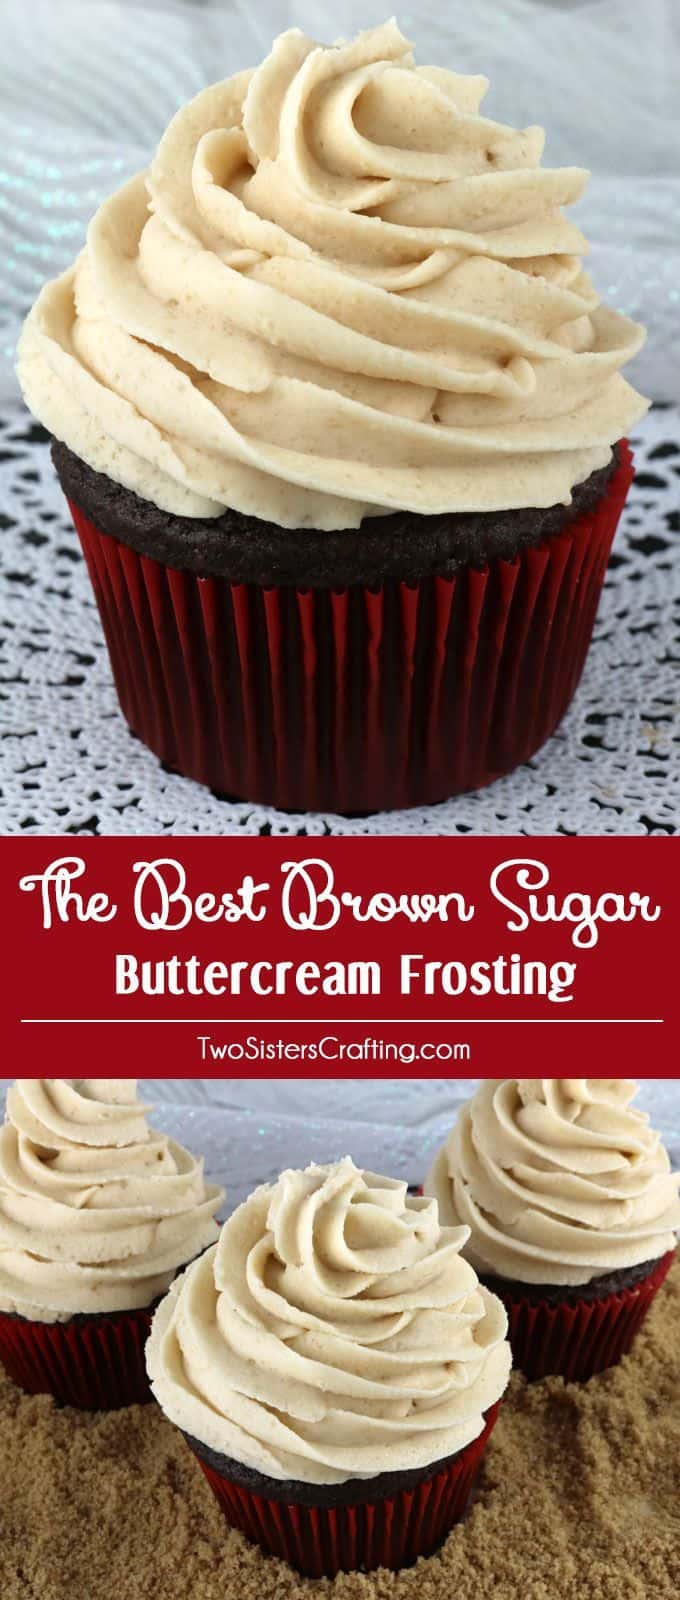 Brown sugar buttercream frosting